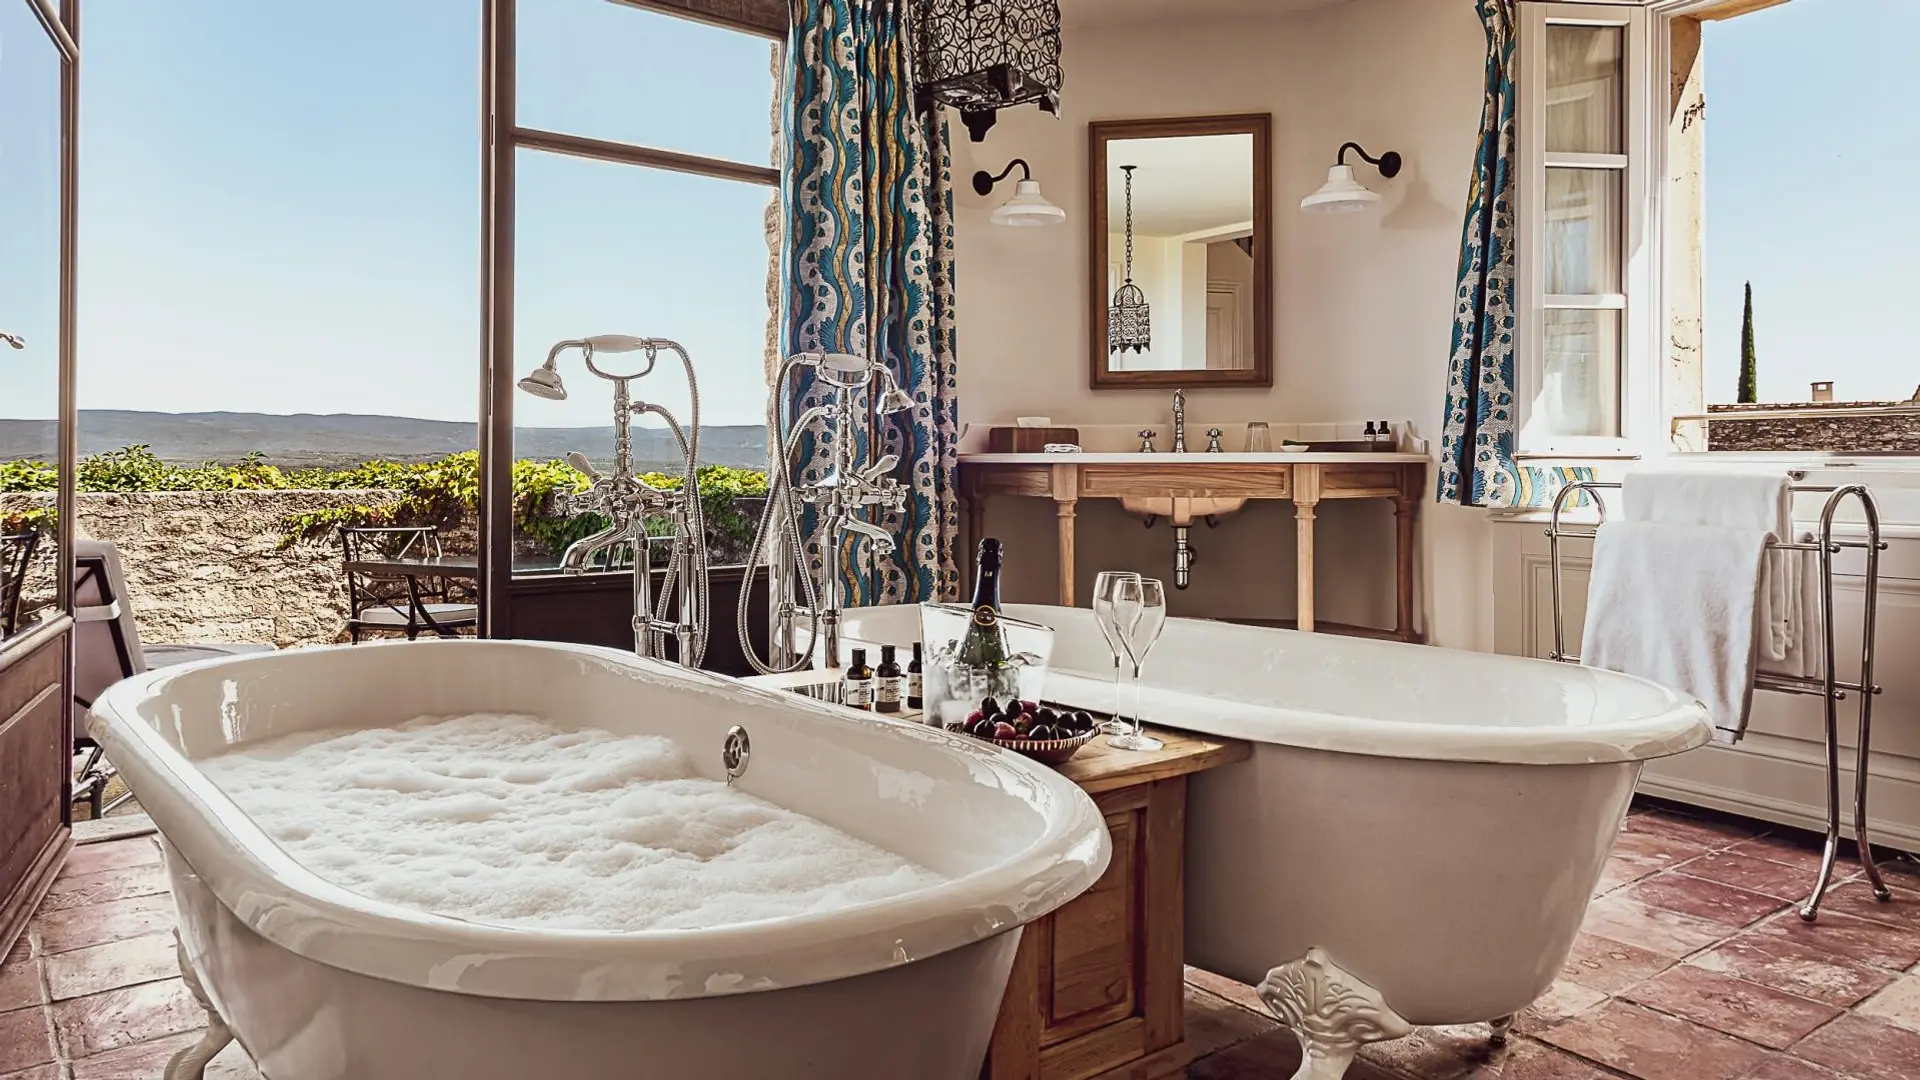 Hotel review Accommodation' - Hôtel Crillon le Brave - Provence - 1